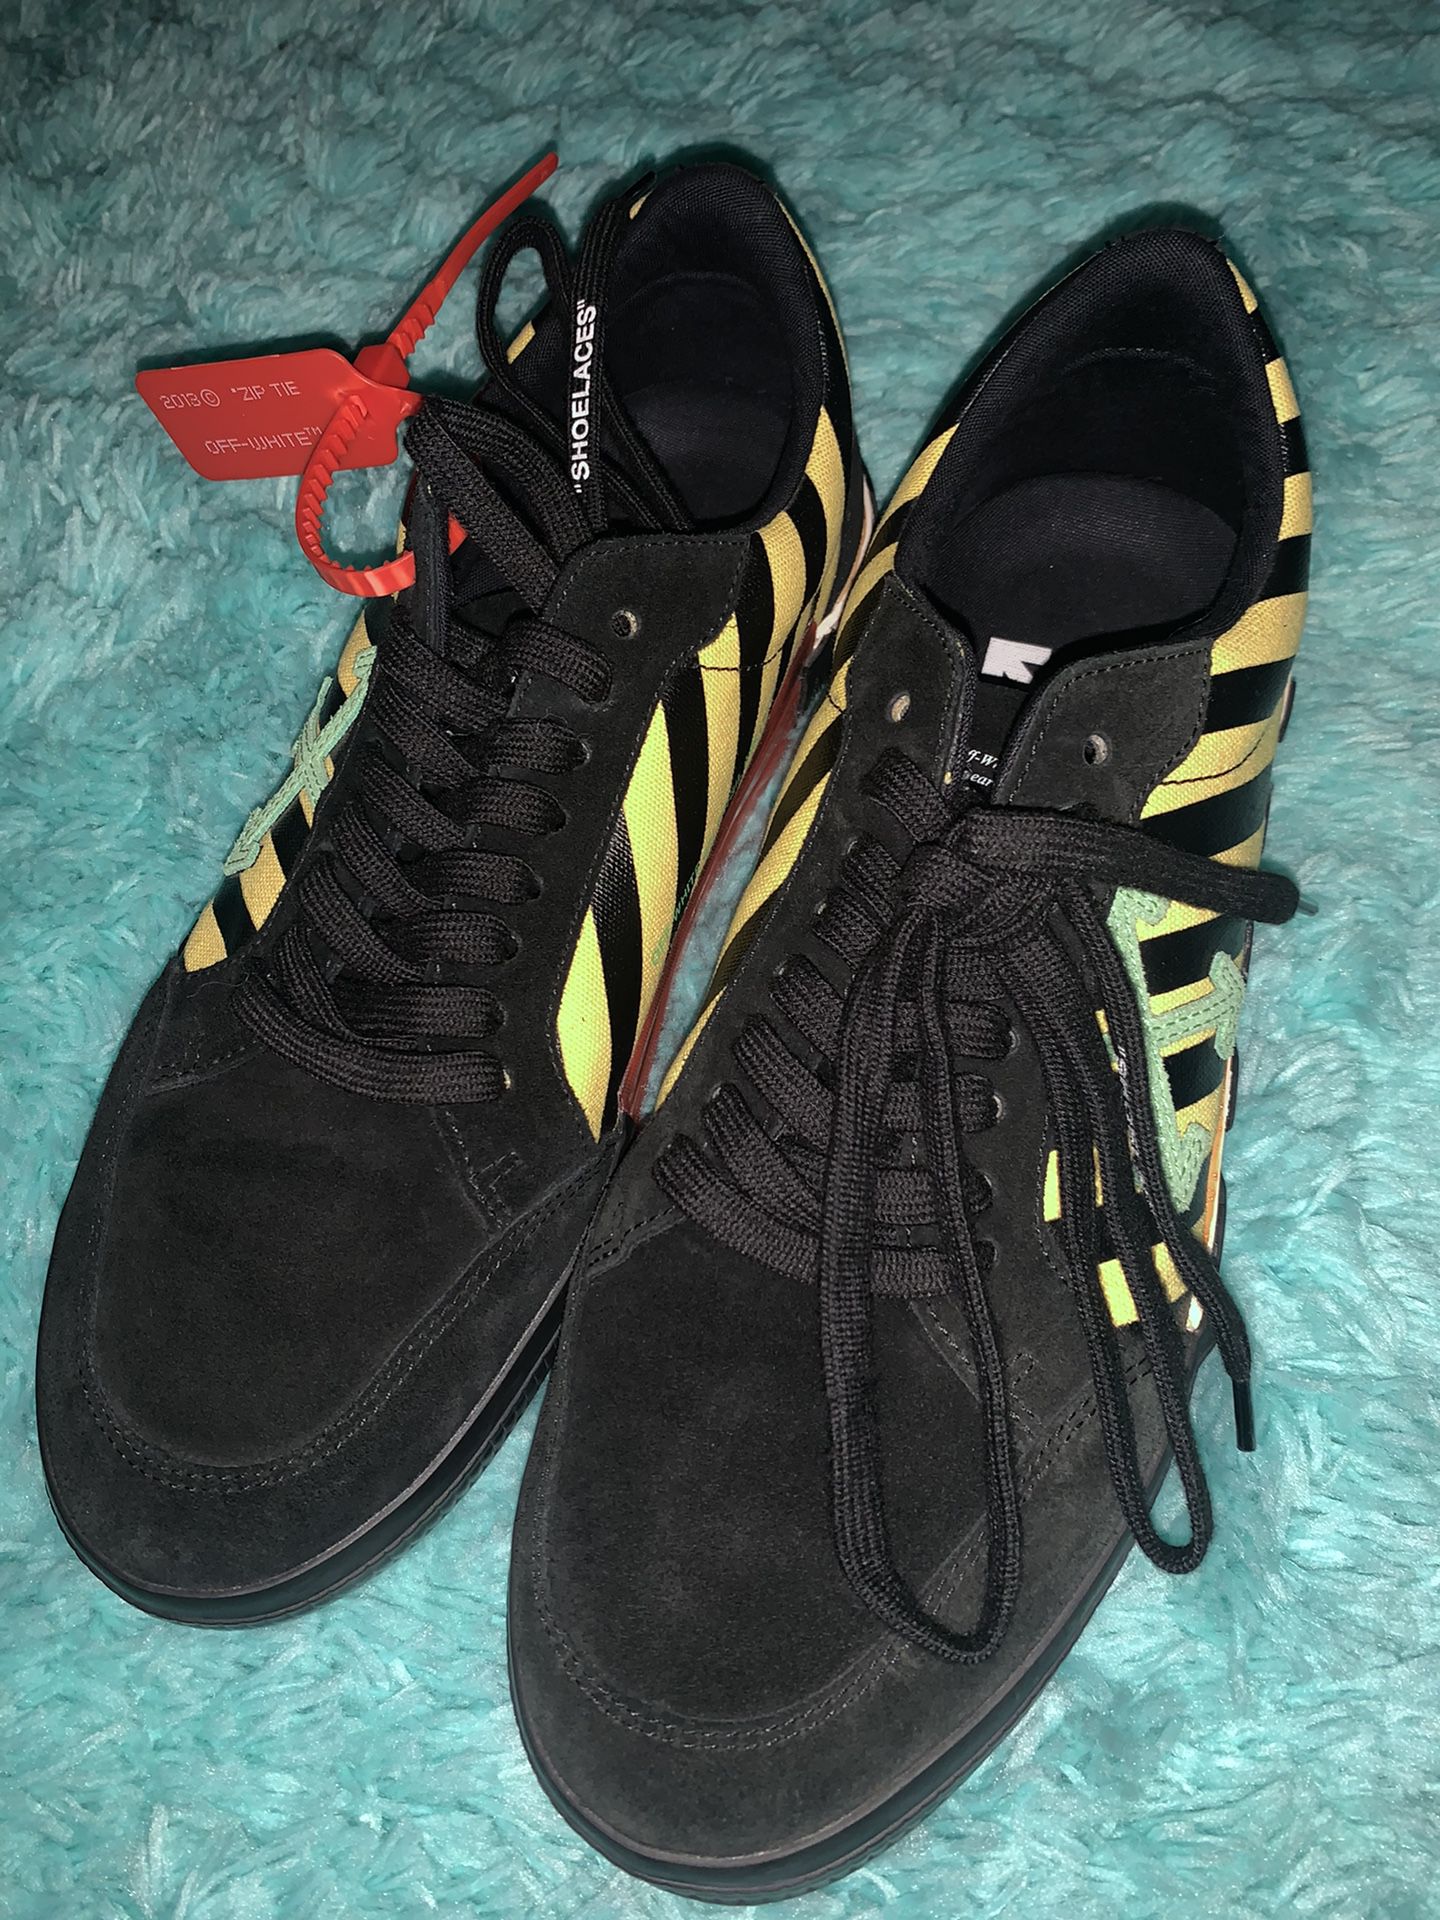 Off White Vulc Low Black Yellow - Size 44 ( 11 U.S.)     #offwhite #offwhiteshoes #mensshoes #shoes #skate #skateshoes #designer #y2k #2000s 